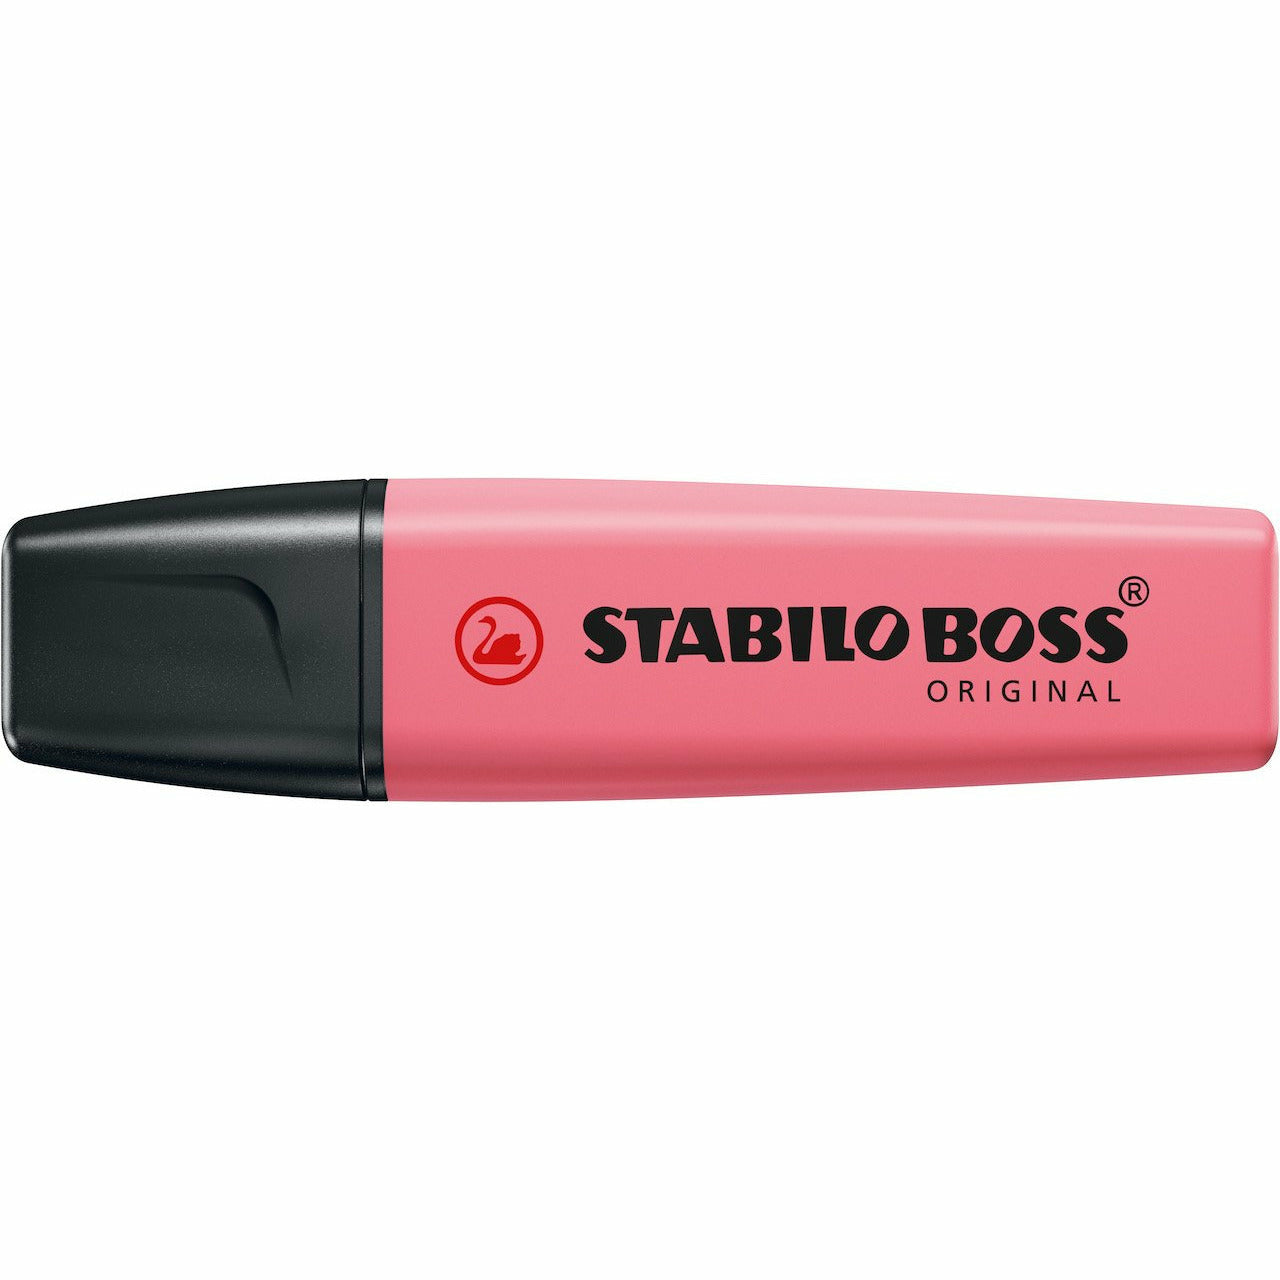 Stabilo Boss pastel lcherry bossom pink